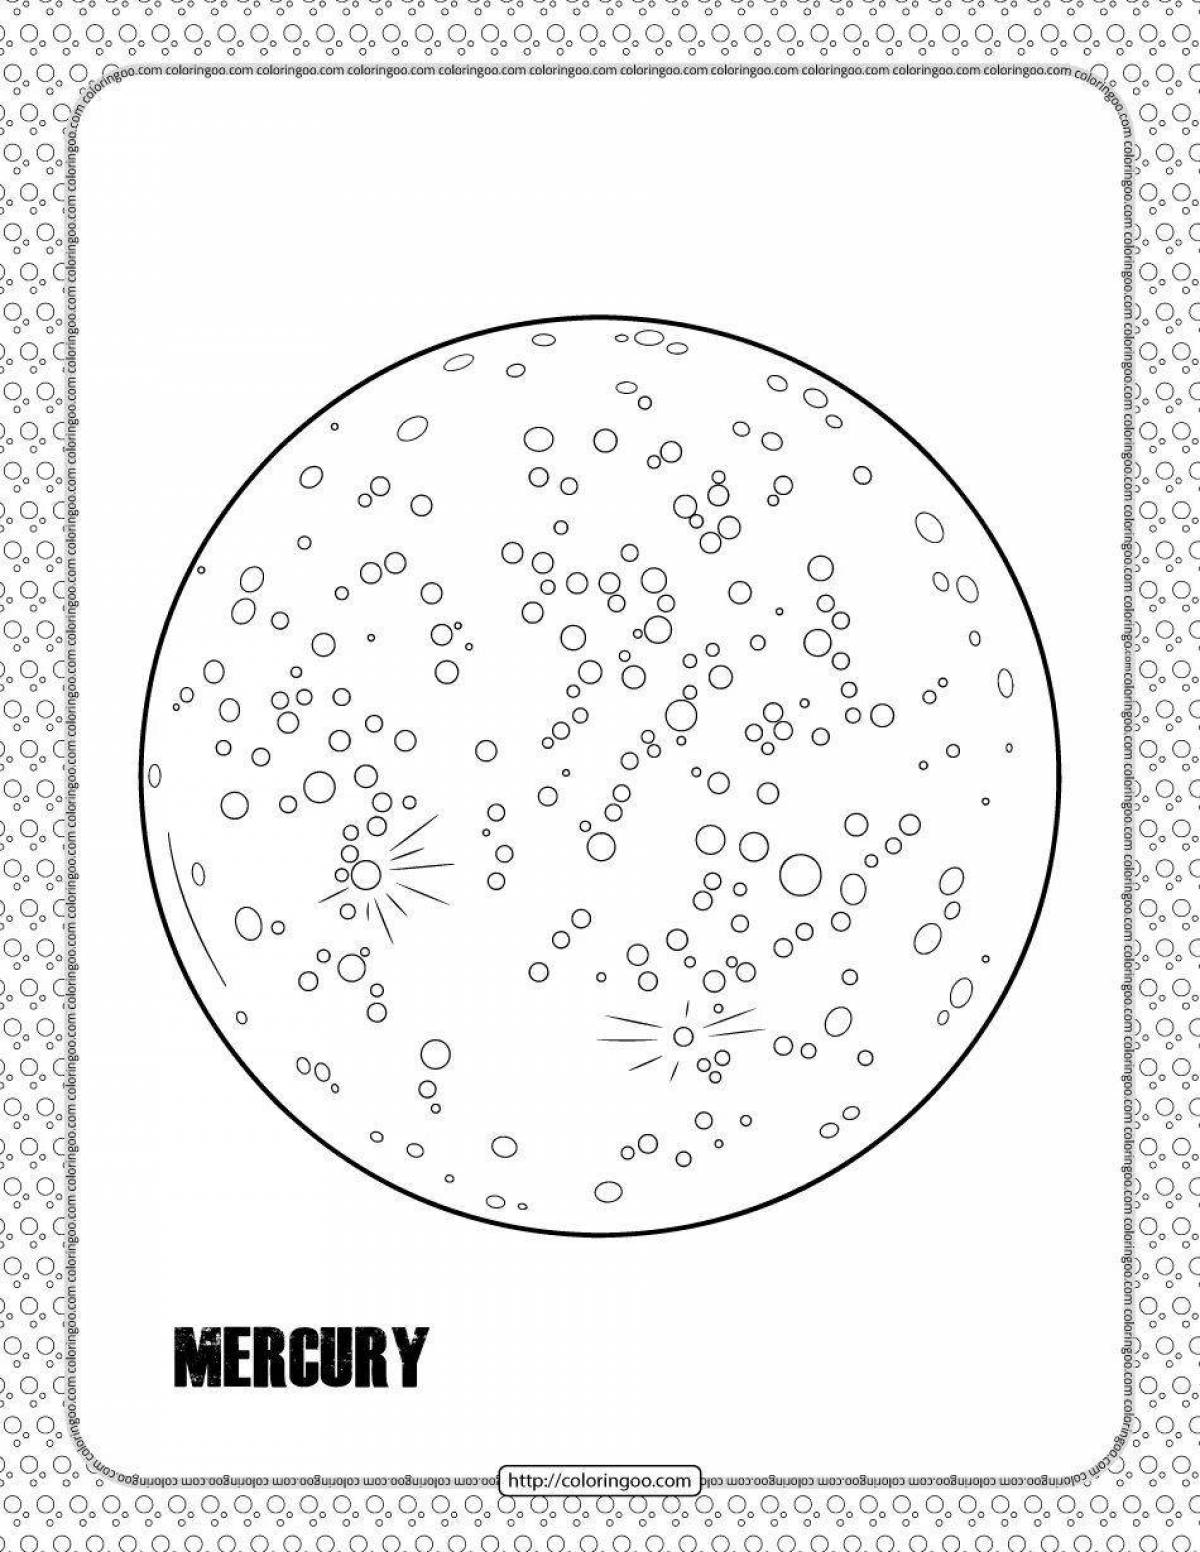 Coloring page wonderful planet mercury